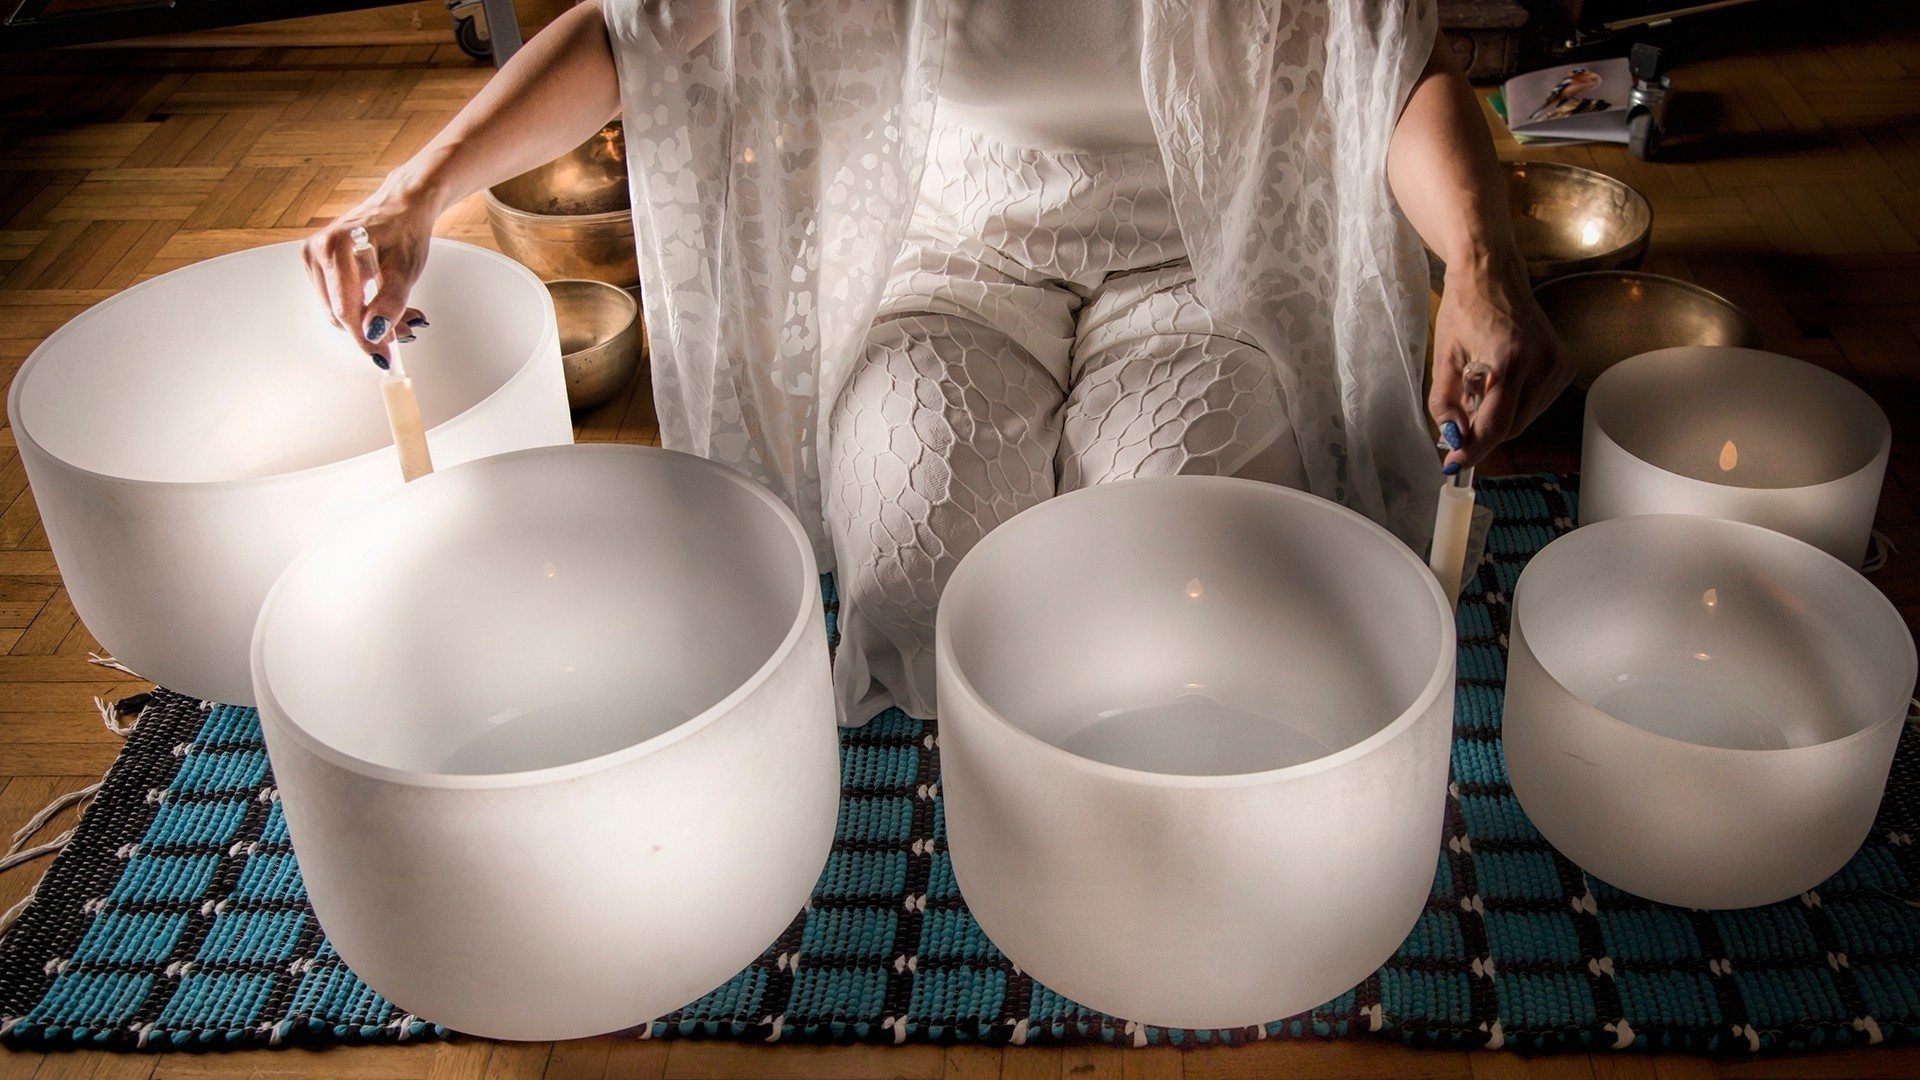 CHUWAR, QLD - Sound Healing with Crystal Singing Bowls